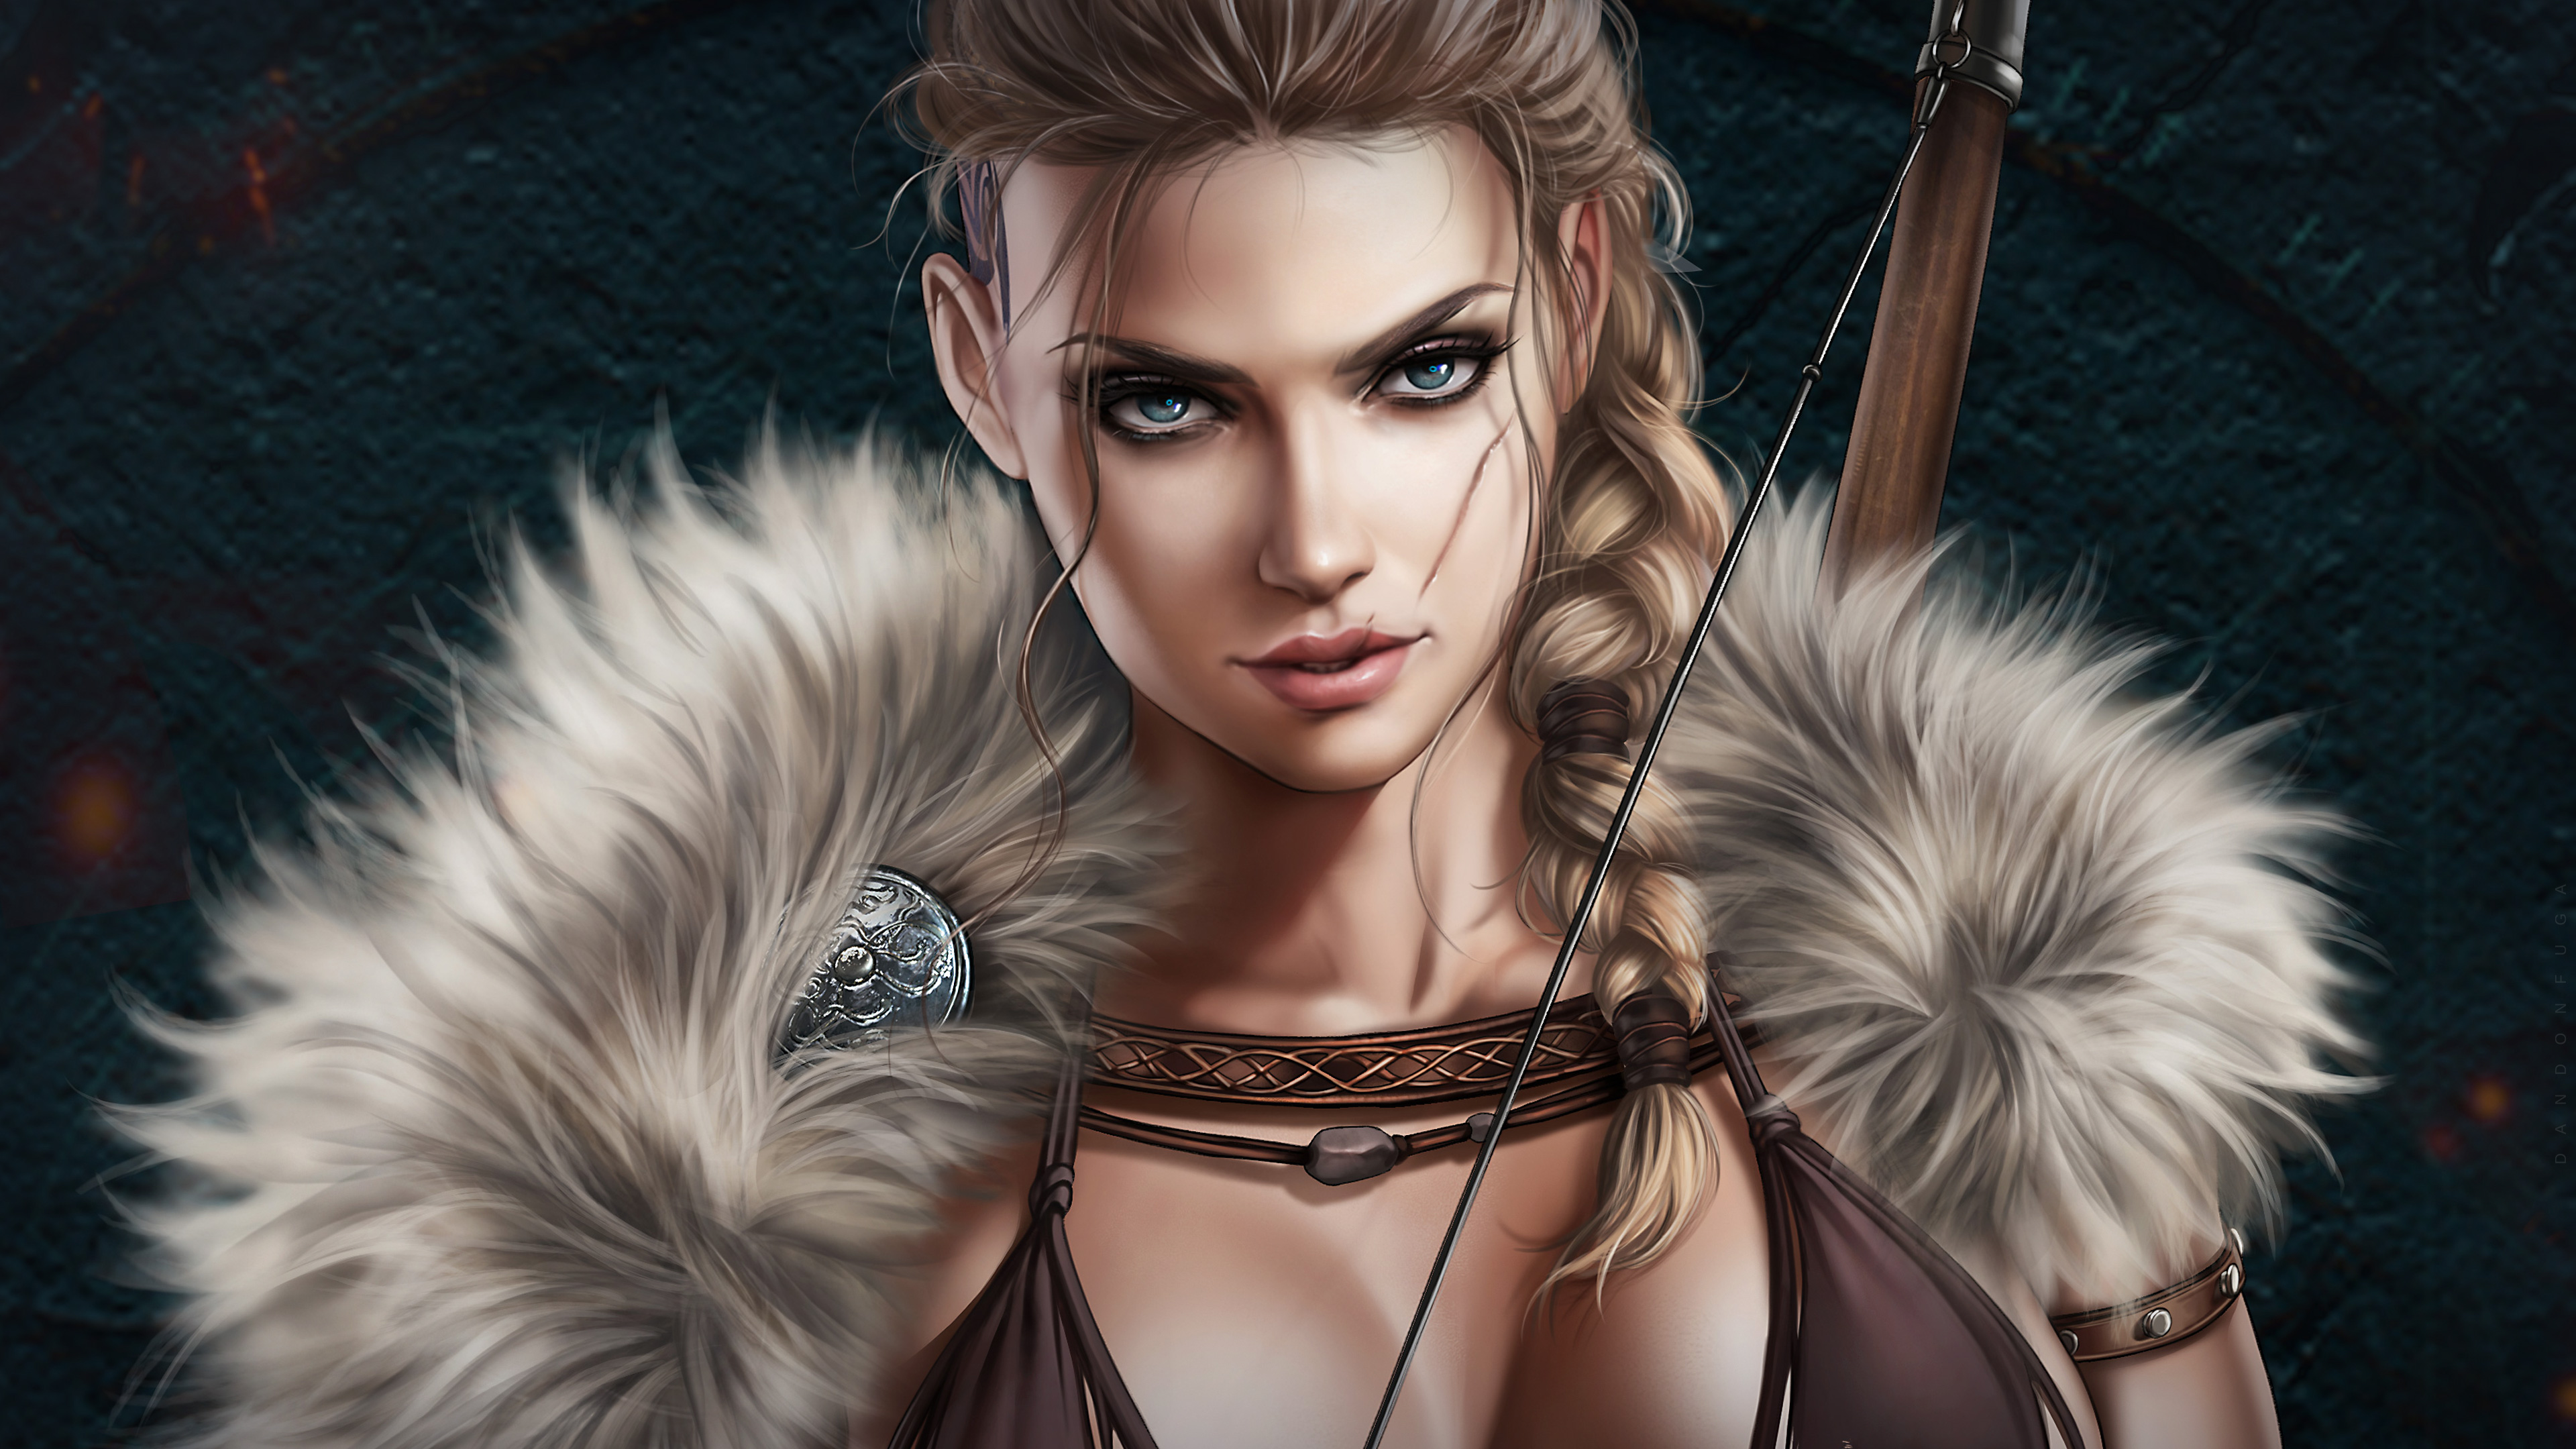 Dandonfuga Warrior Digital Art Artwork Fantasy Girl Fur Blonde Women Dark Background Closeup Assassi 3840x2160